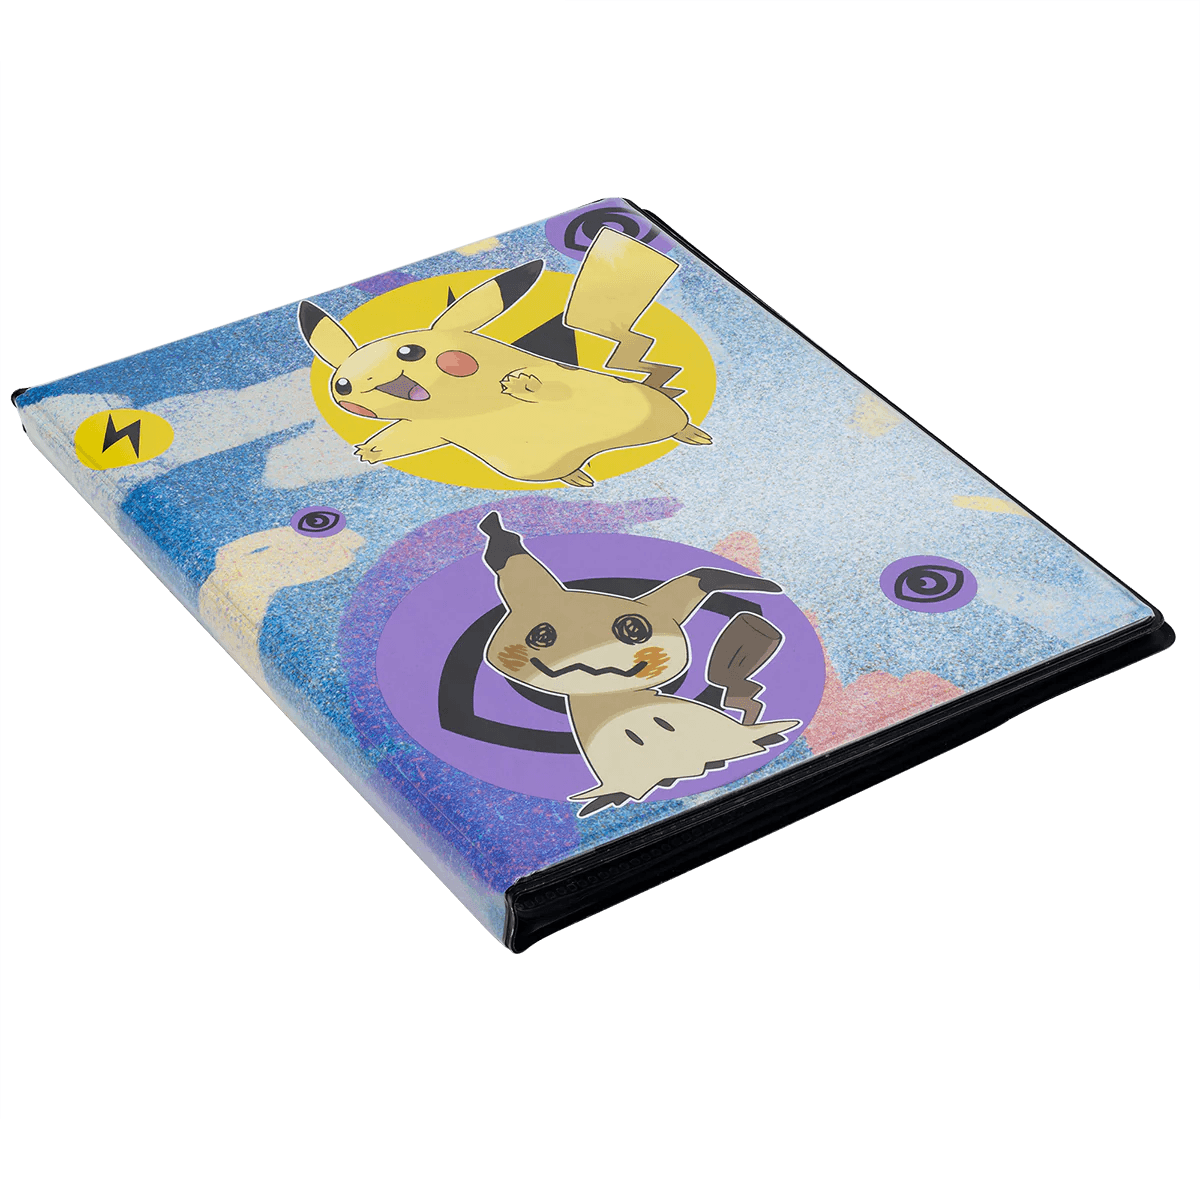 Ultra PRO - Album/Binder/Portfolio 4-Pocket (Holds 80 cards + 4 Oversize cards) - Pokemon - Pikachu & Mimikyu - Hobby Champion Inc